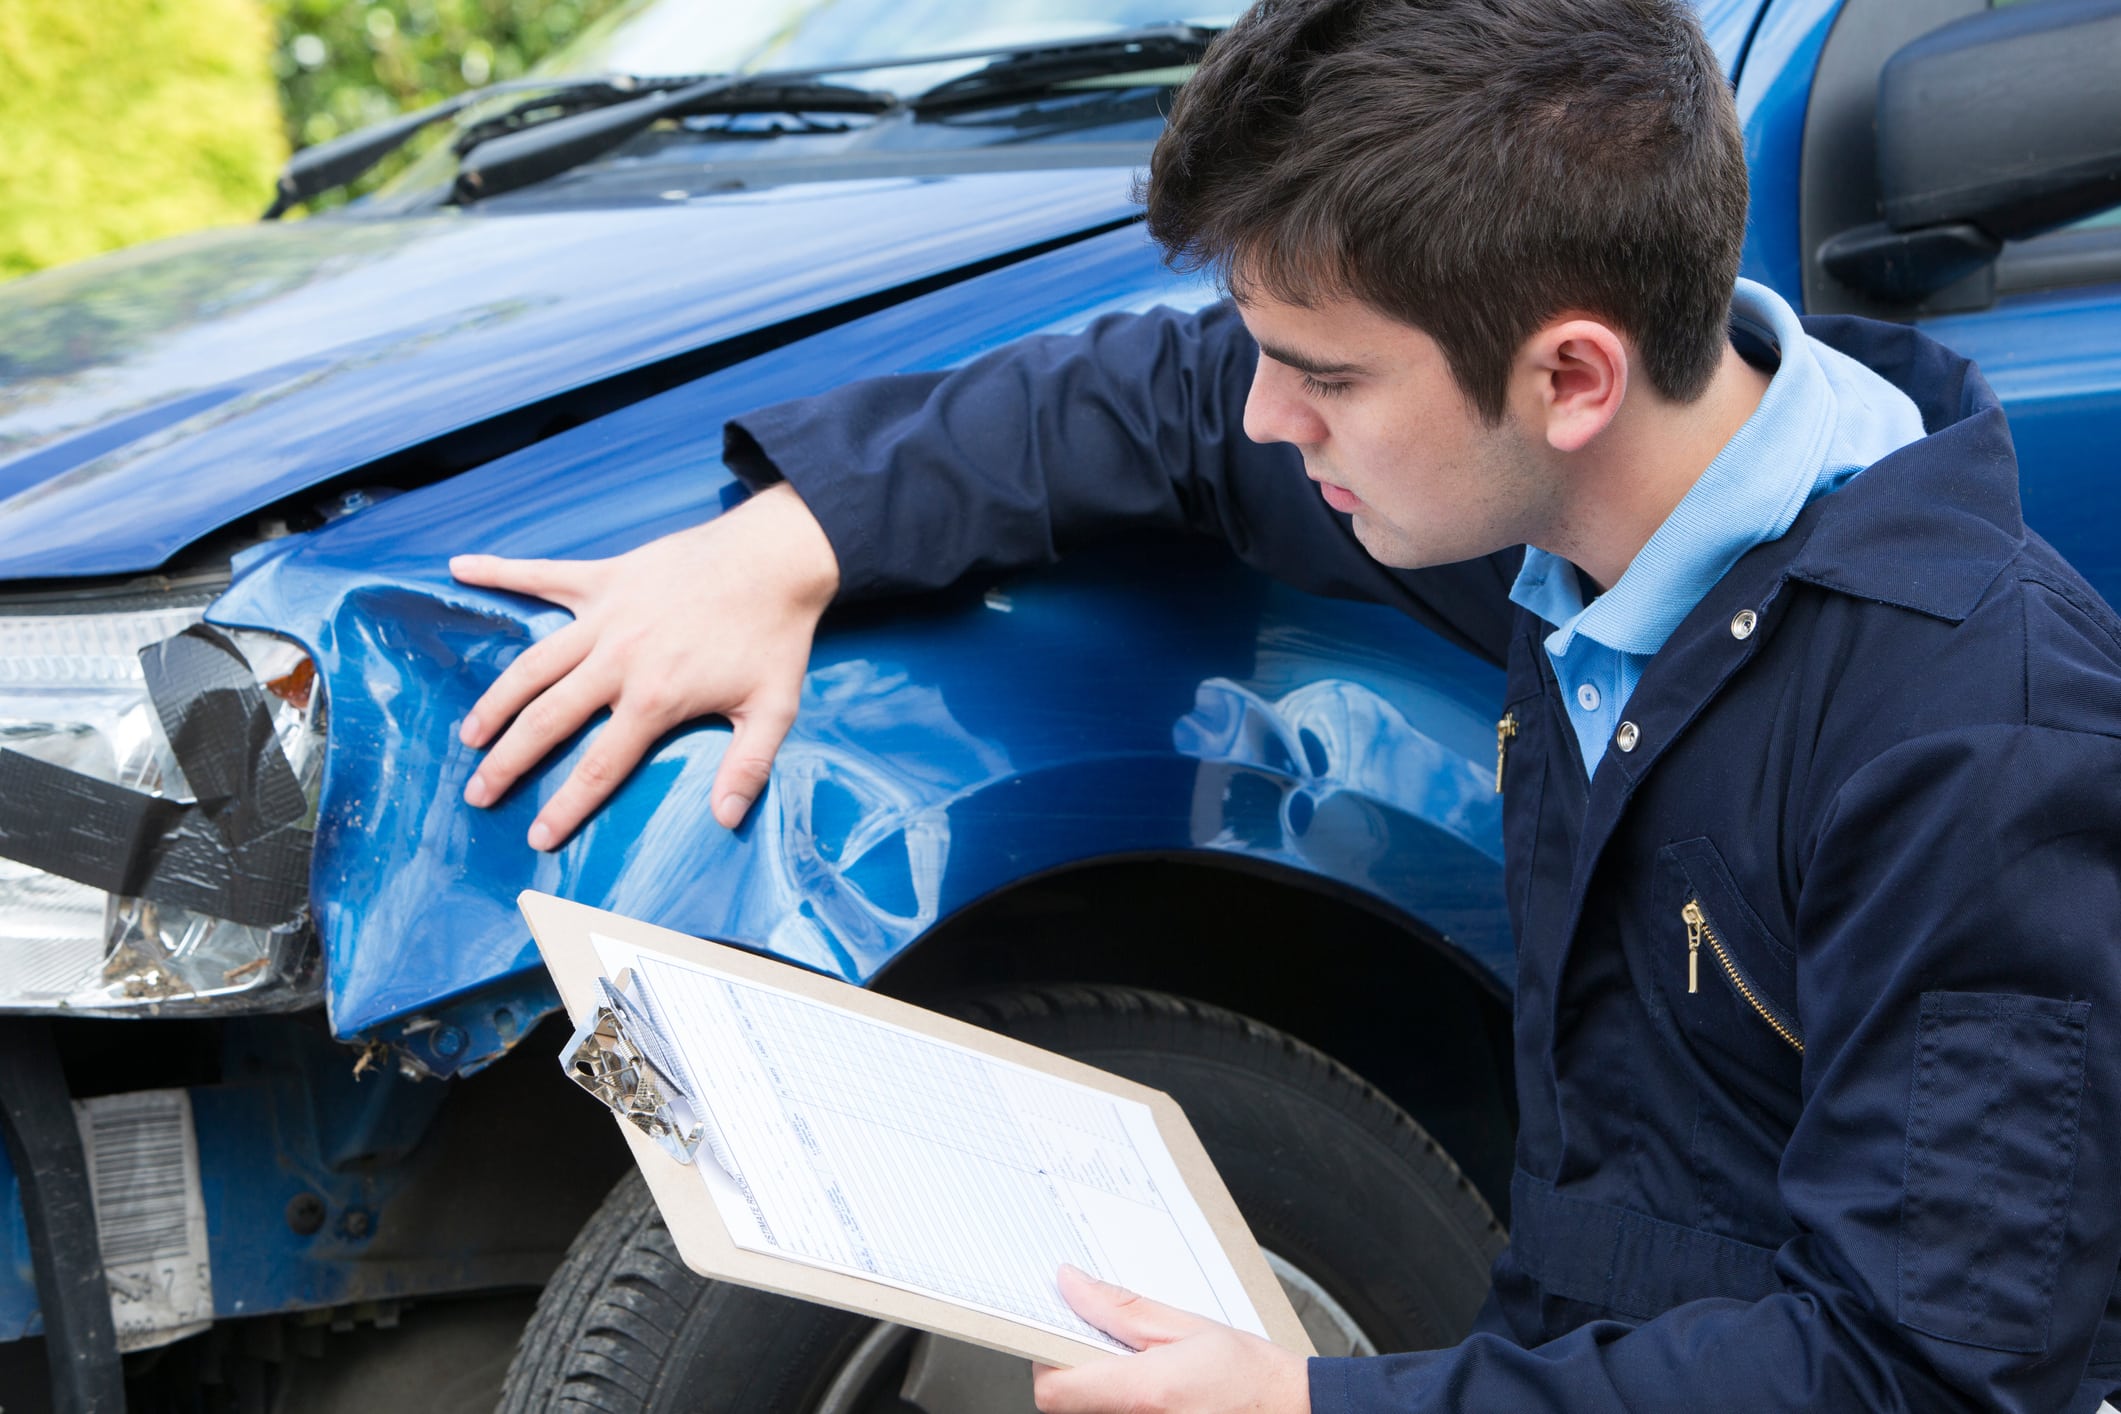 A repair man inspecting damage to a rental car.